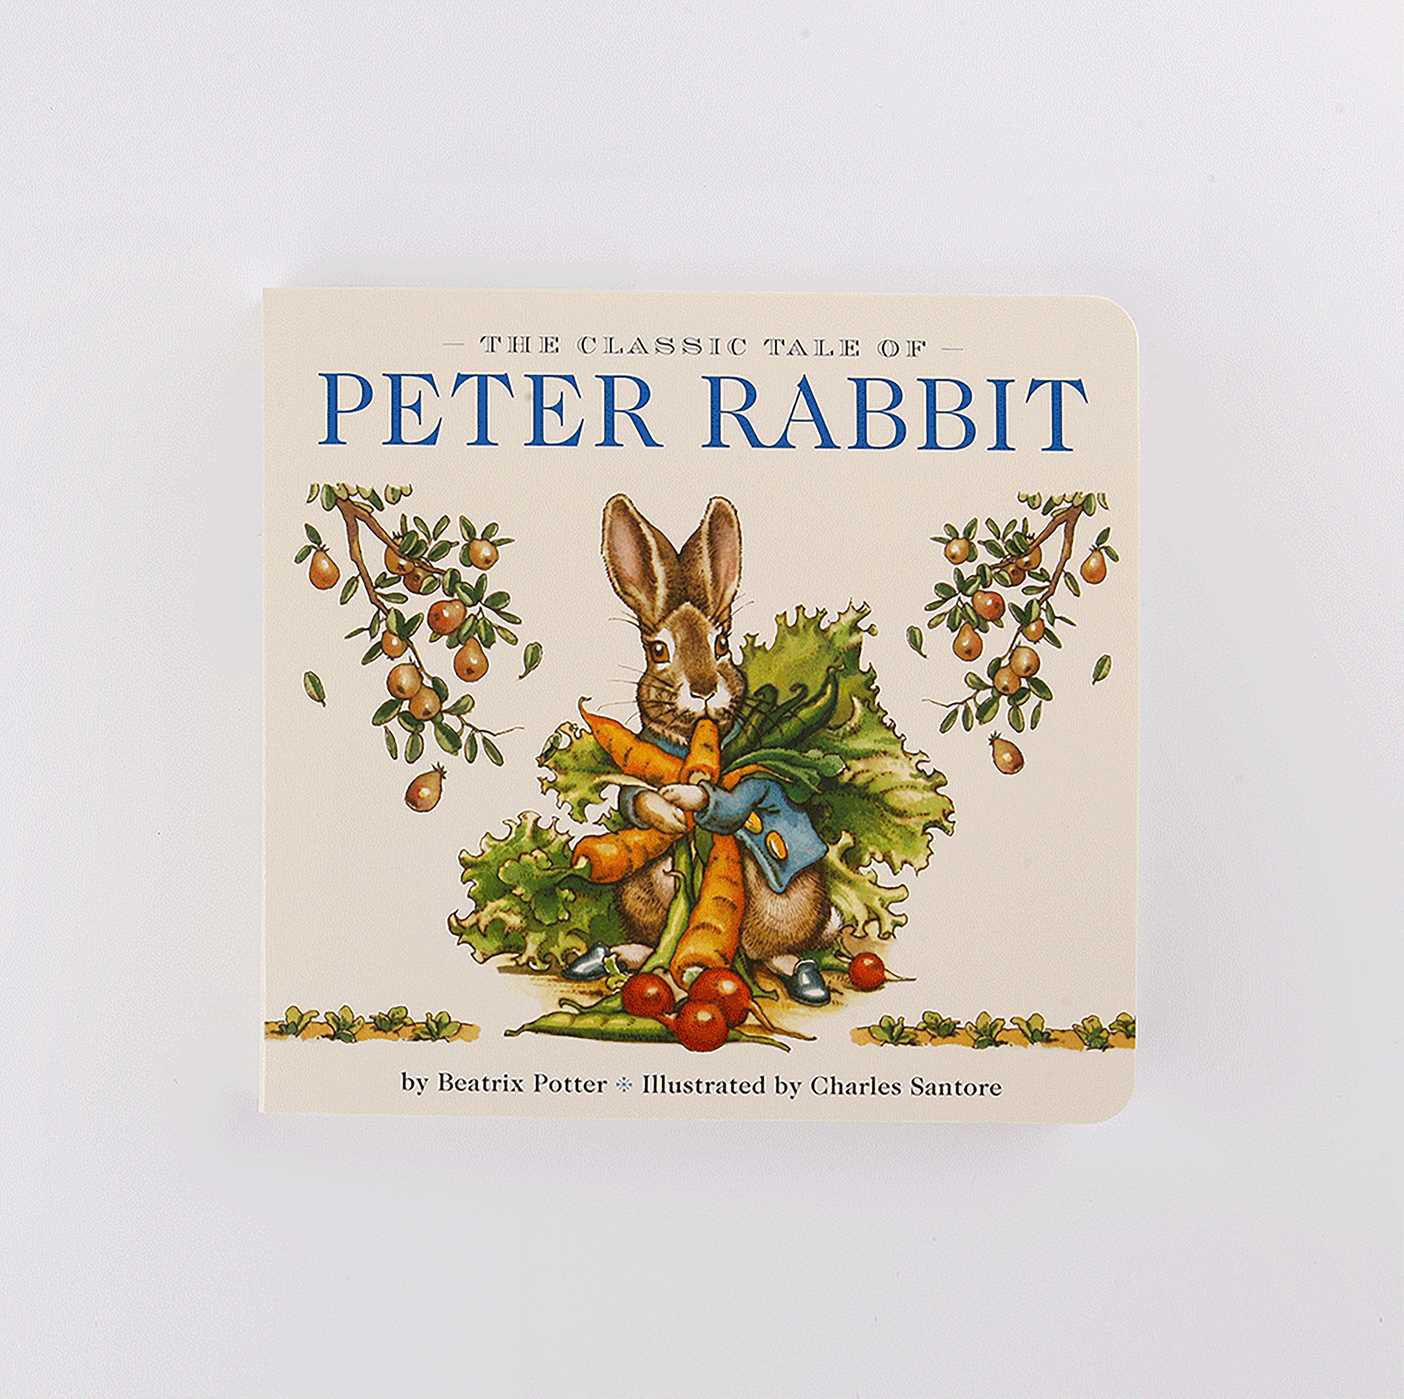 The Velveteen Rabbit Plush Gift Set: The Classic Edition Board Book + Plush Stuffed Animal Toy Rabbit Gift Set [Book]